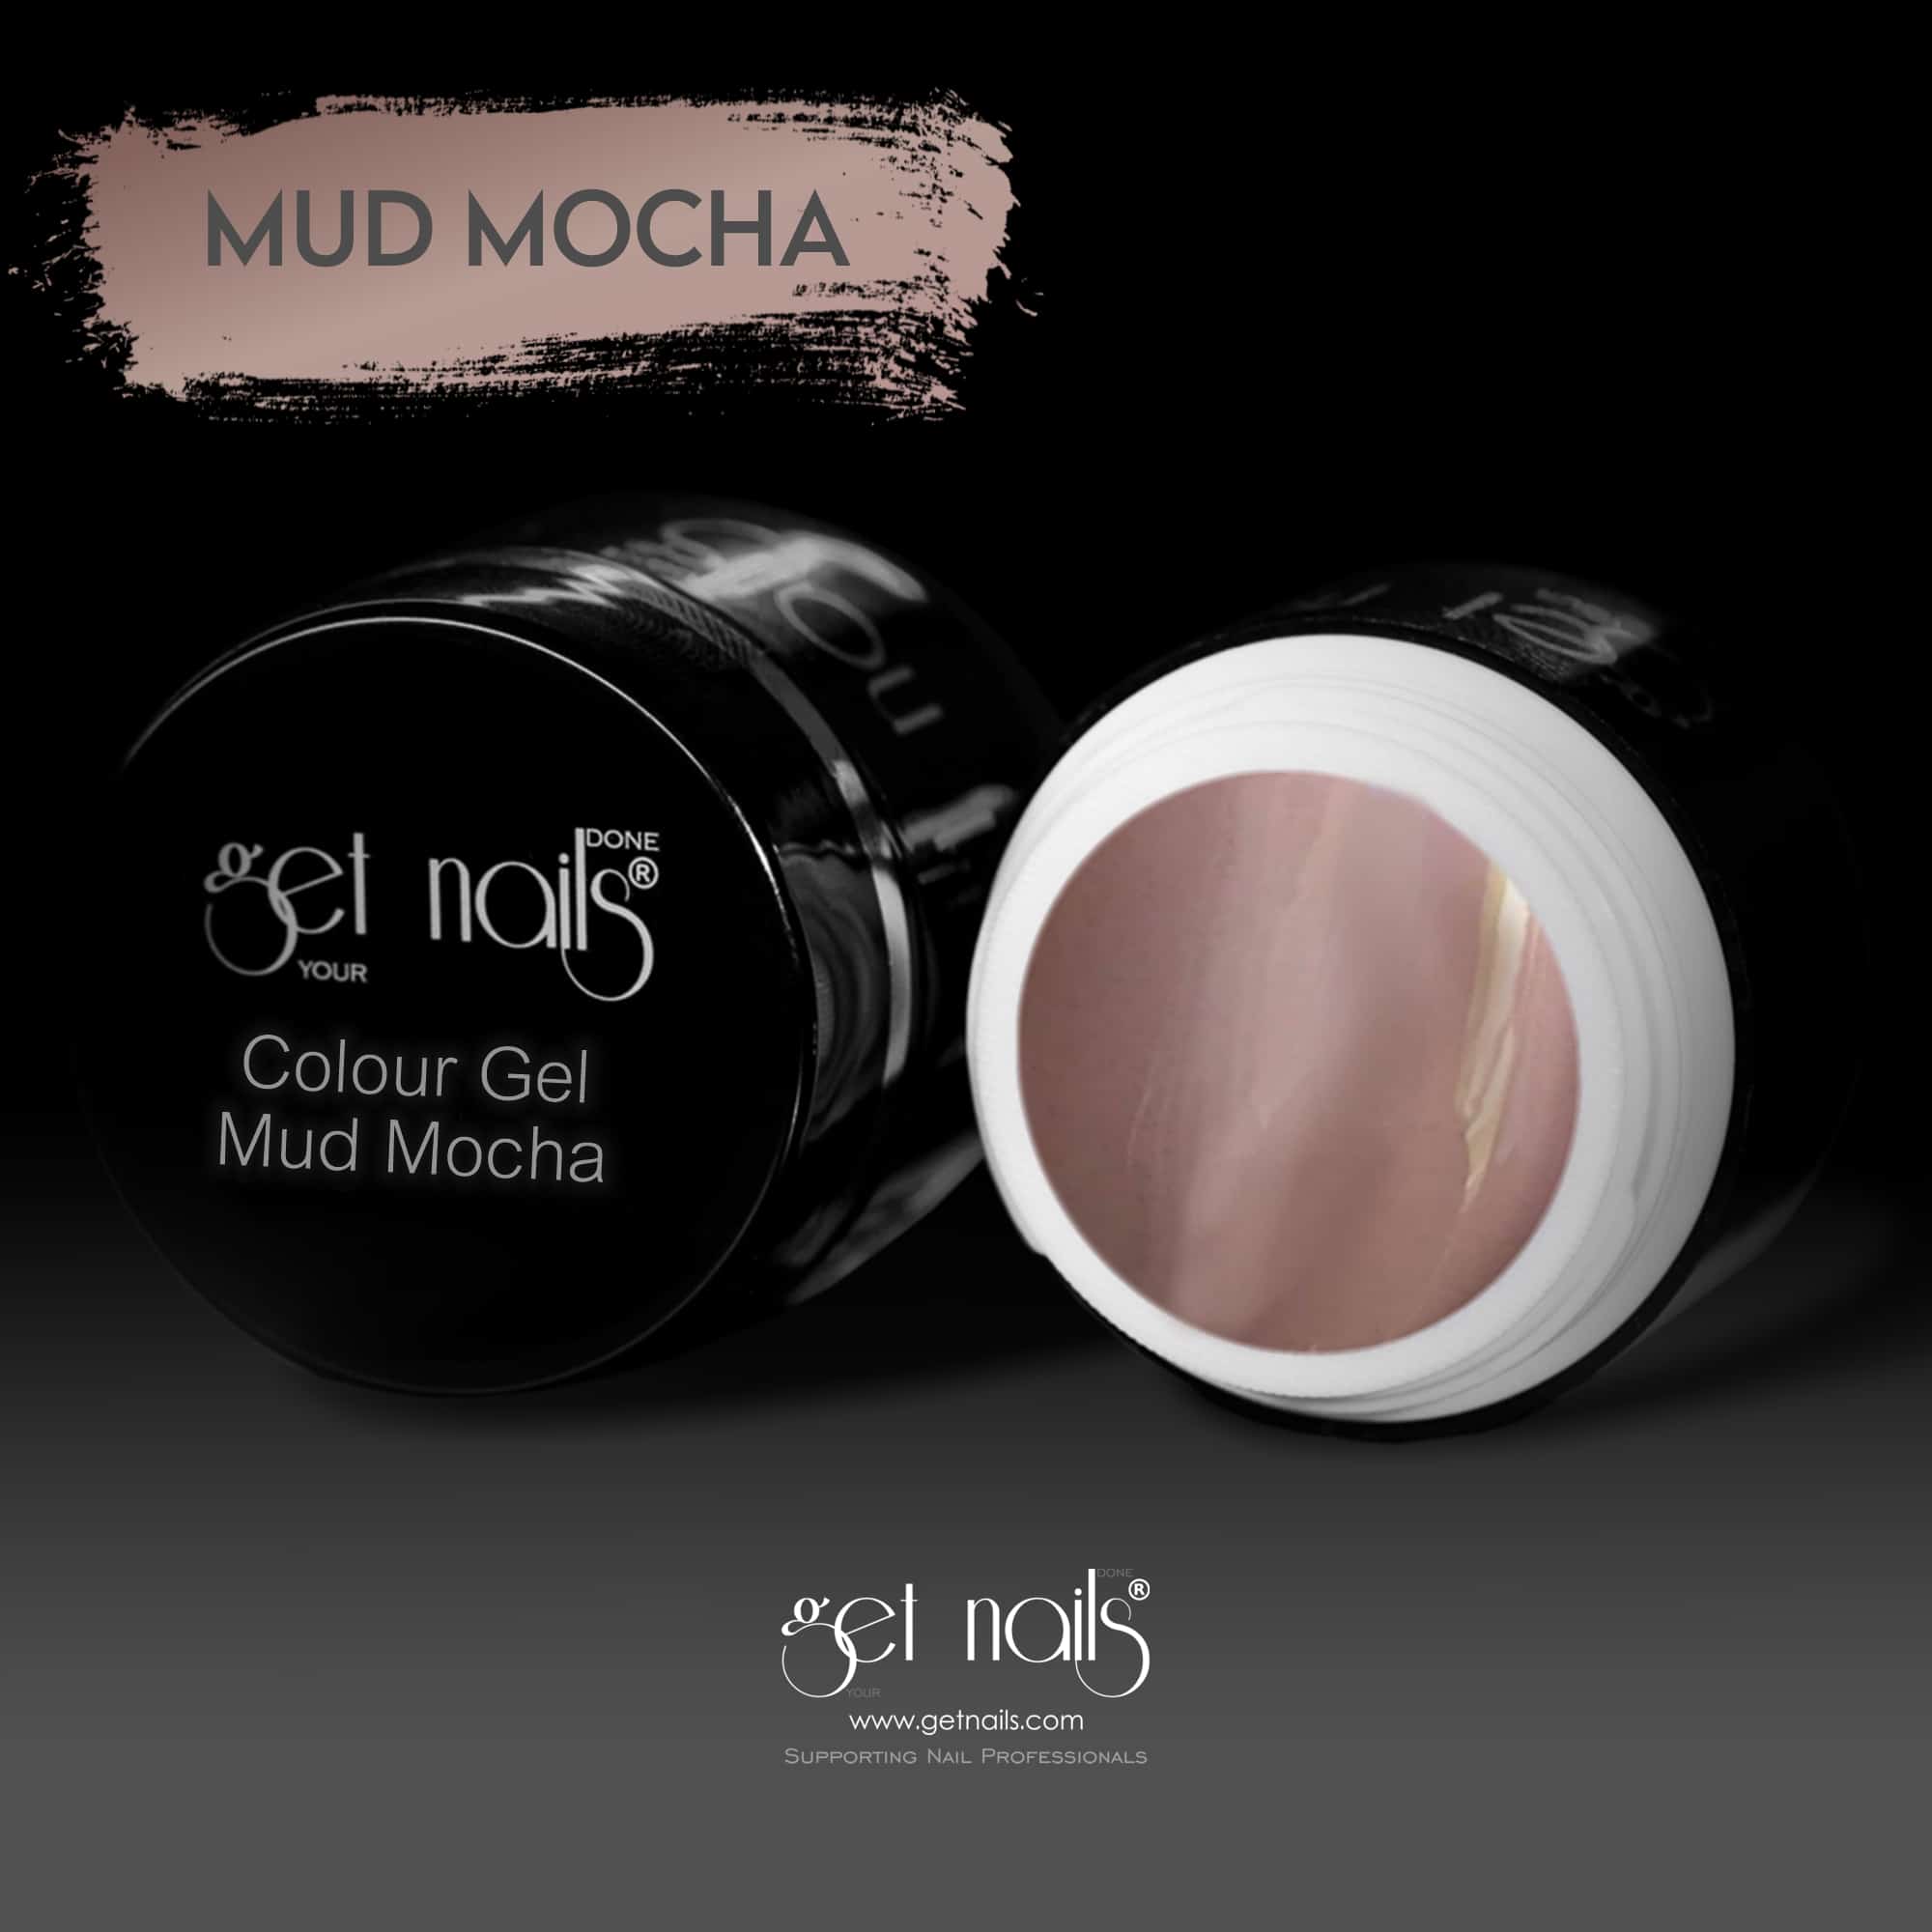 Get Nails Austria - Color Gel Mud Mocha 5g